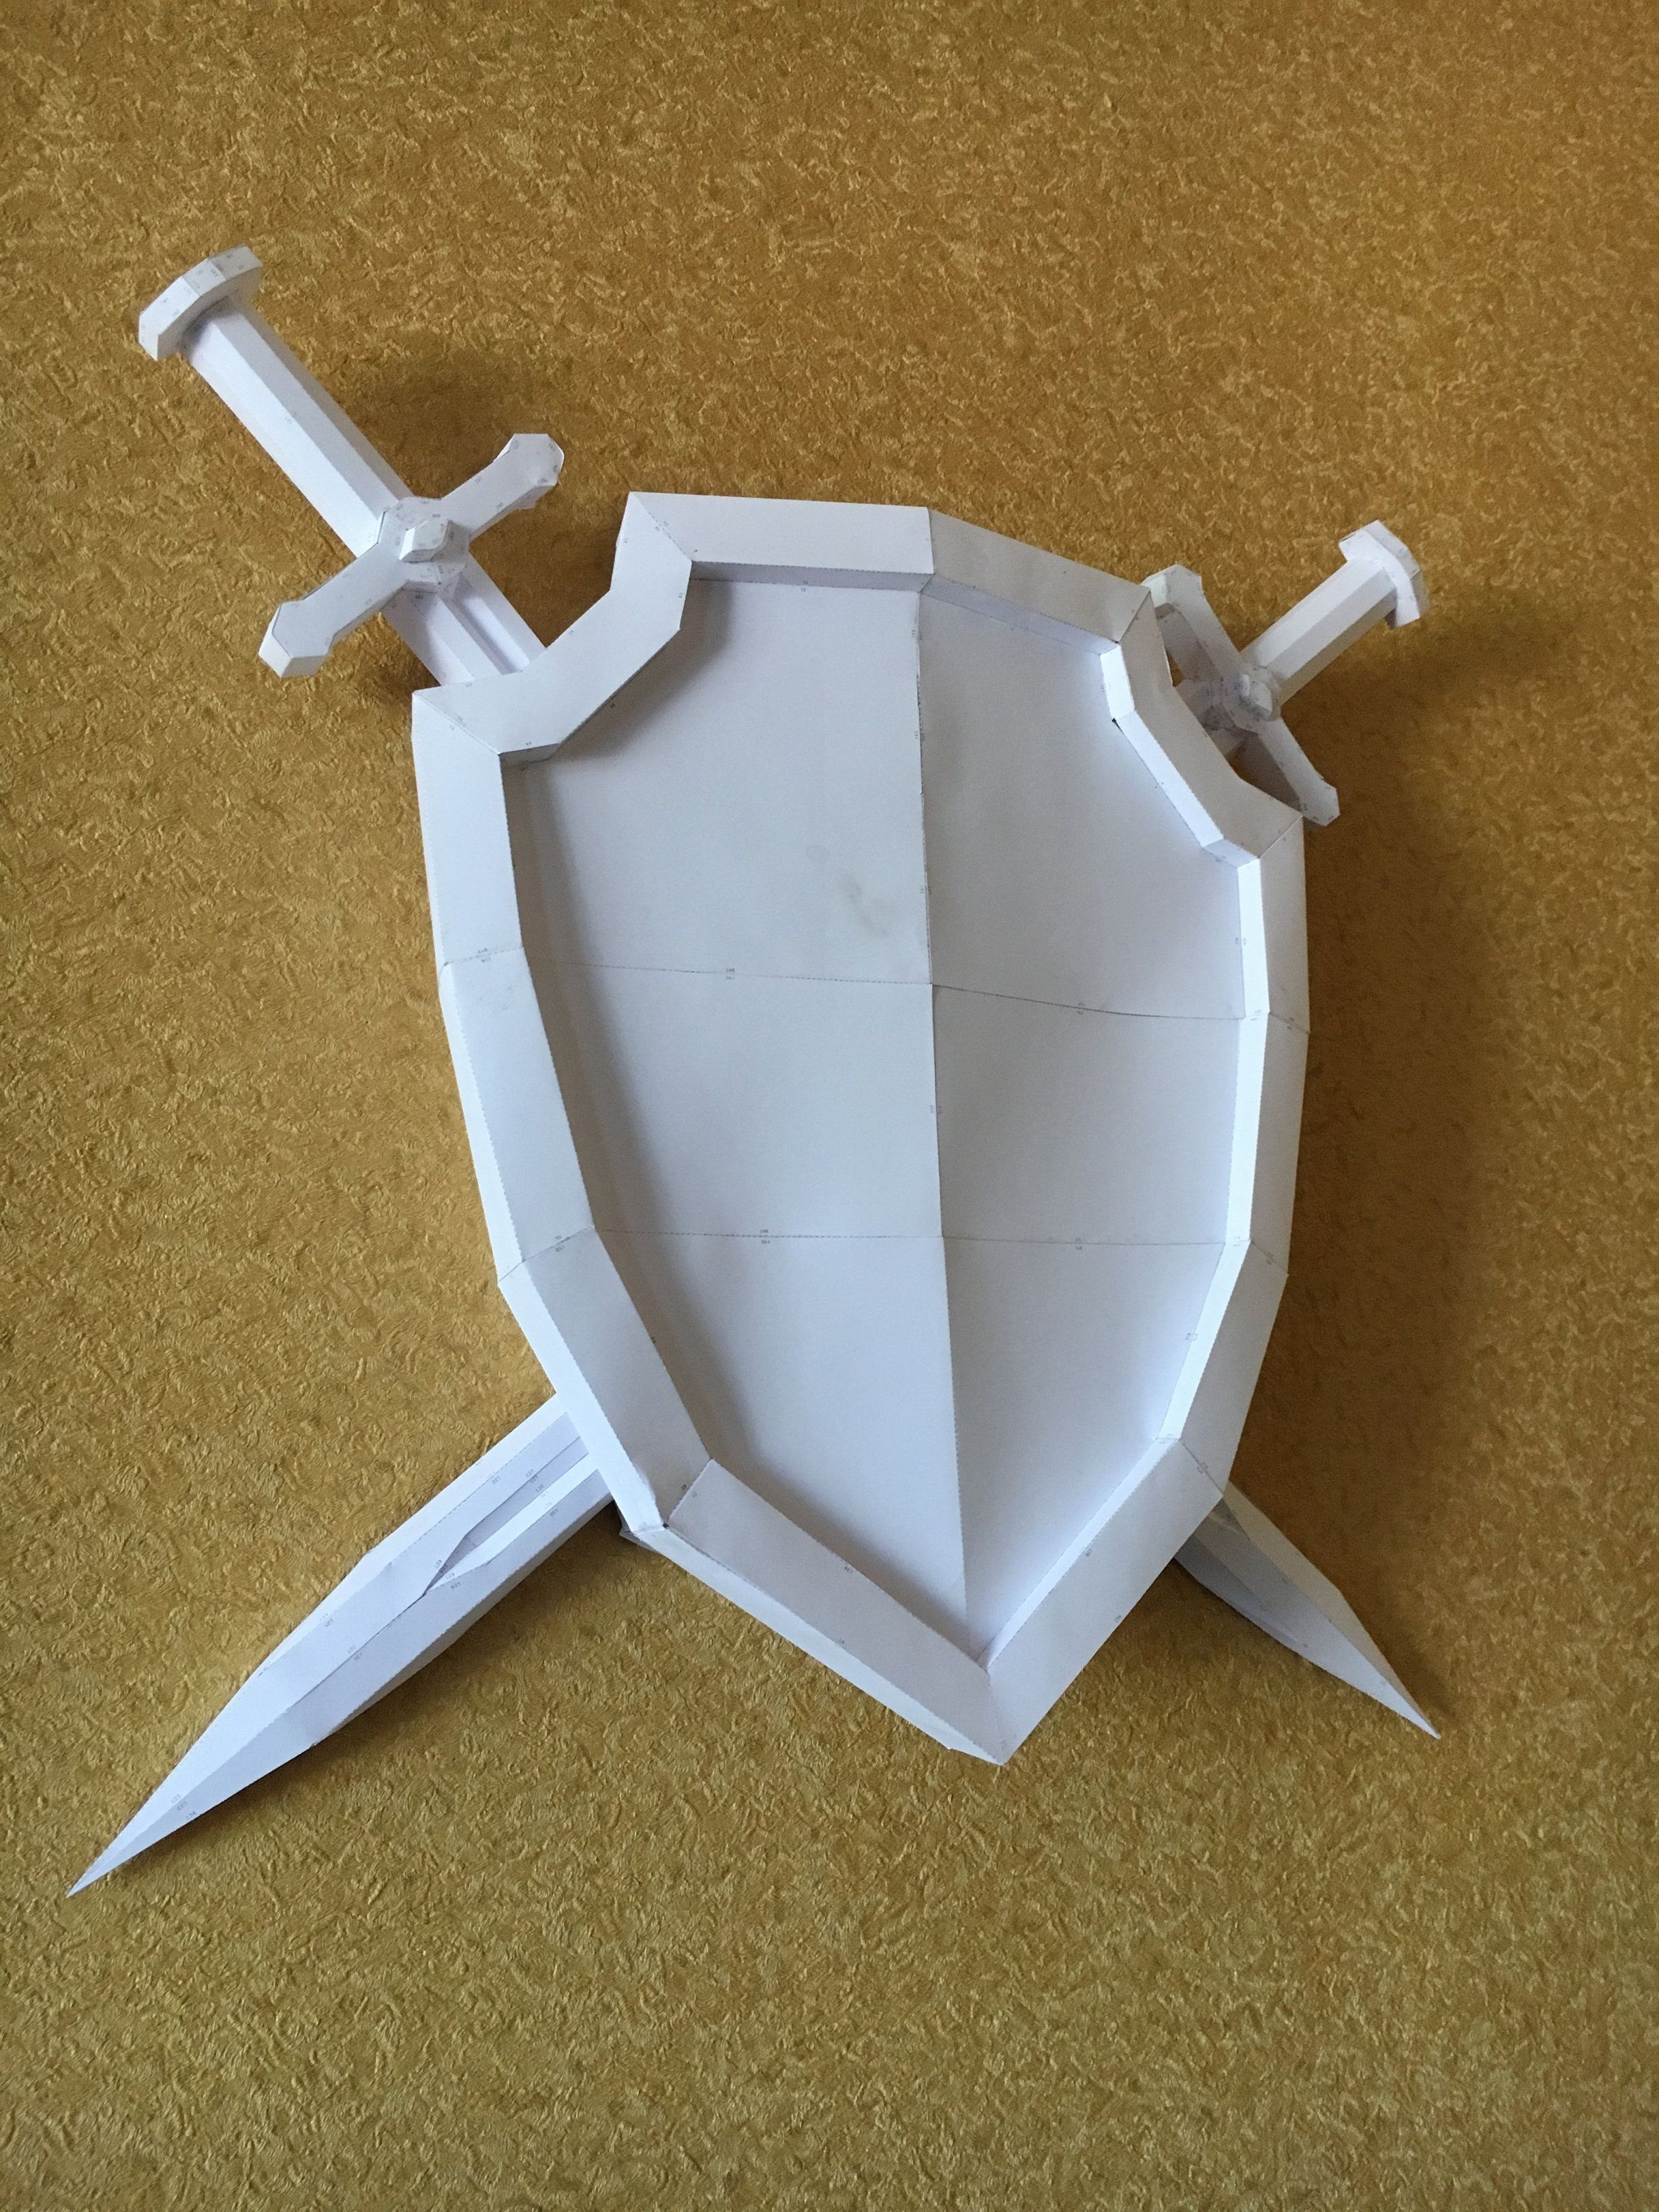 Canon Papercraft Sword Shield Diy Papercraft Model ÐÑÐ¼Ð°Ð¶Ð½ÑÐµ Ð¸Ð·Ð´ÐµÐ Ð¸Ñ